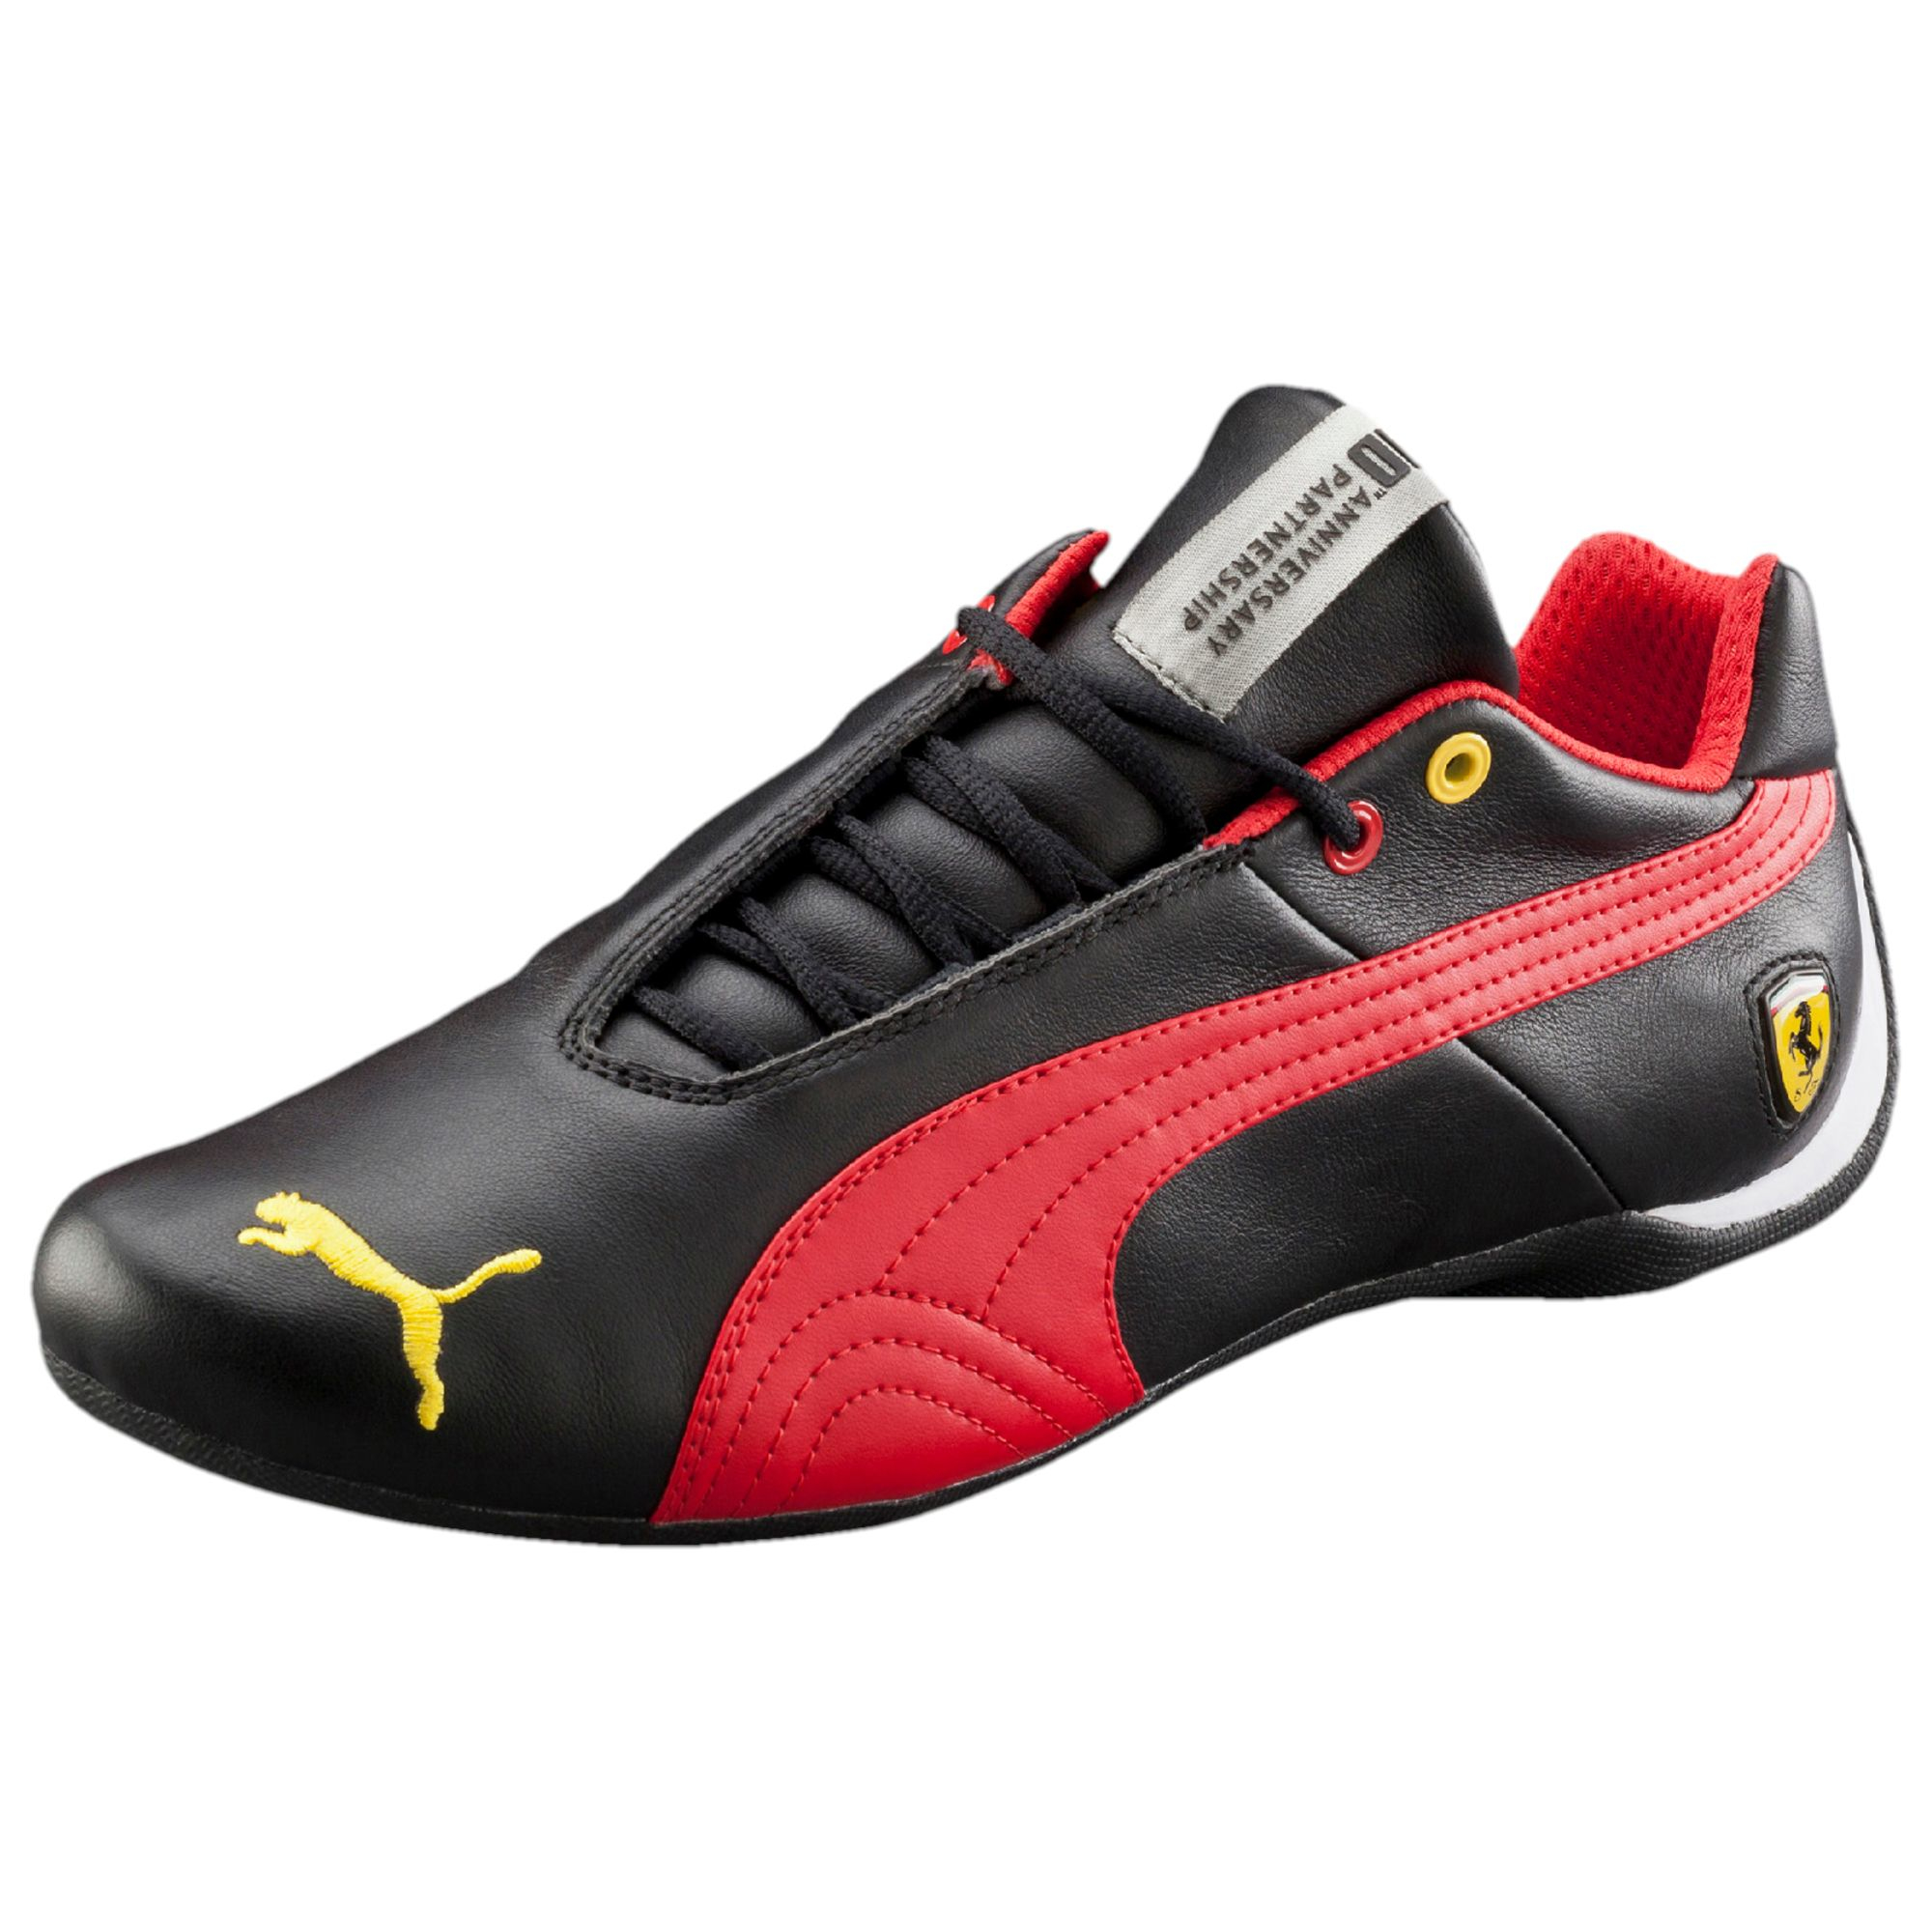 Lyst - Puma Ferrari Future Cat 10 Leather Men's Shoes in Red for Men